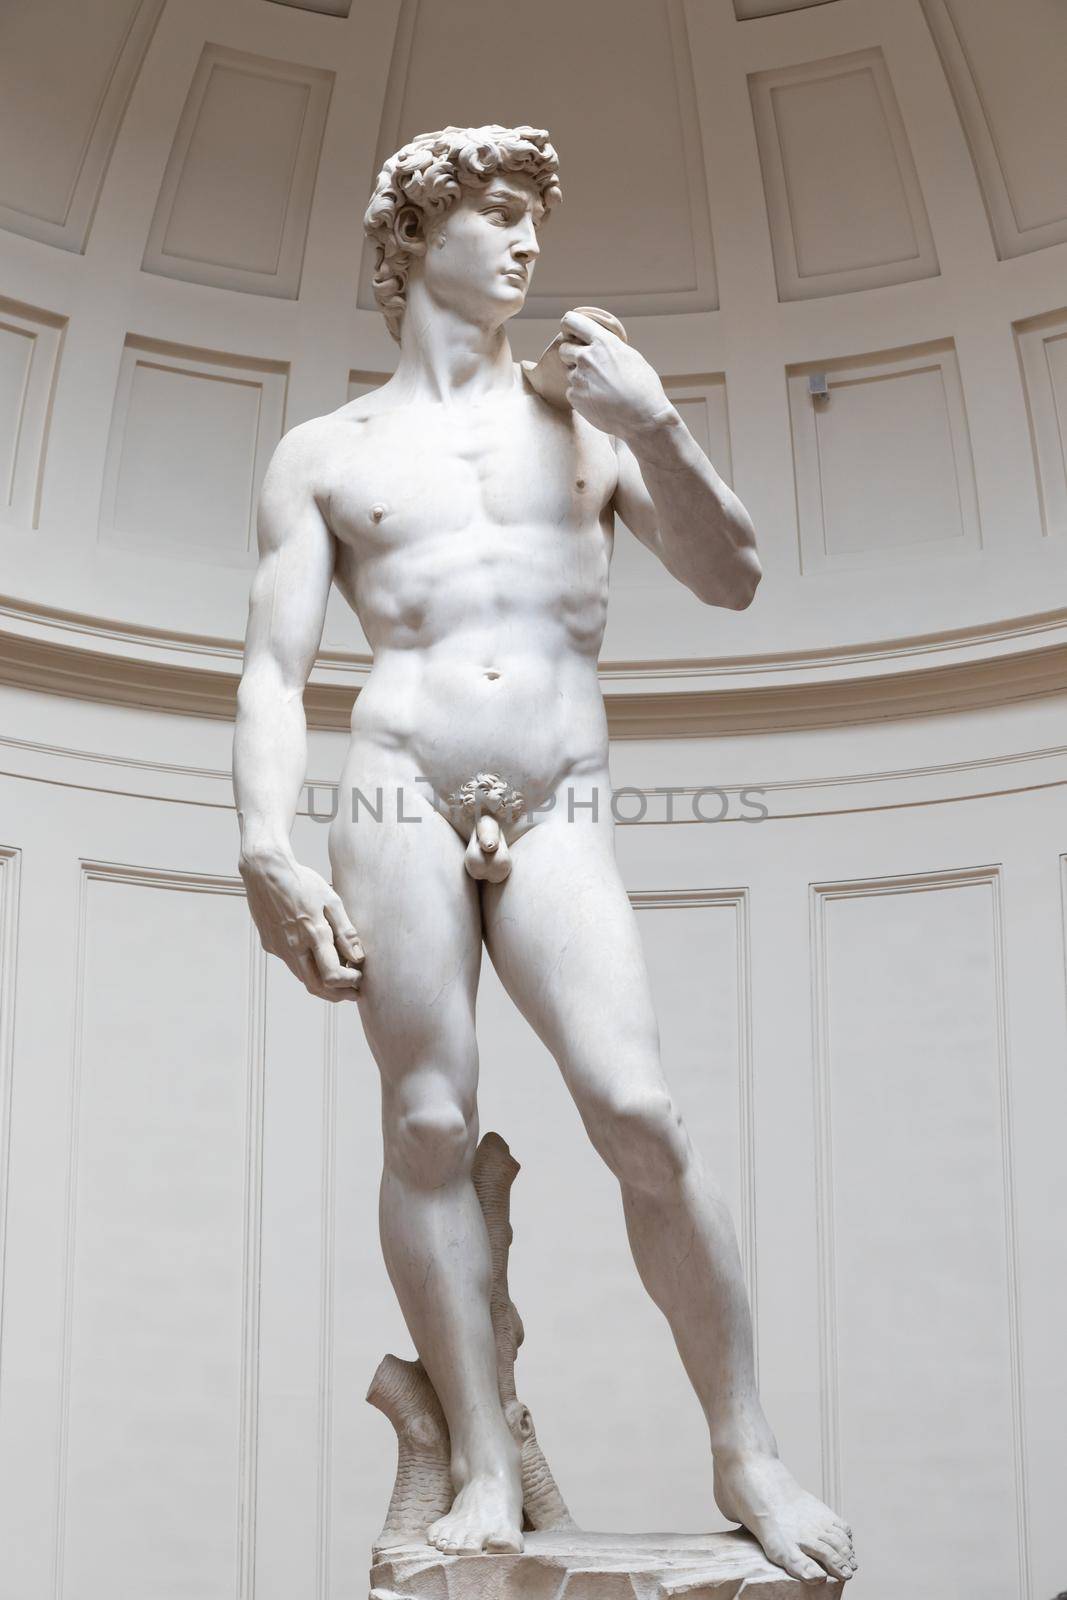 David sculpture by Michelangelo Buonarroti - 1501. The masterpiece of the Renaissance art. by Perseomedusa